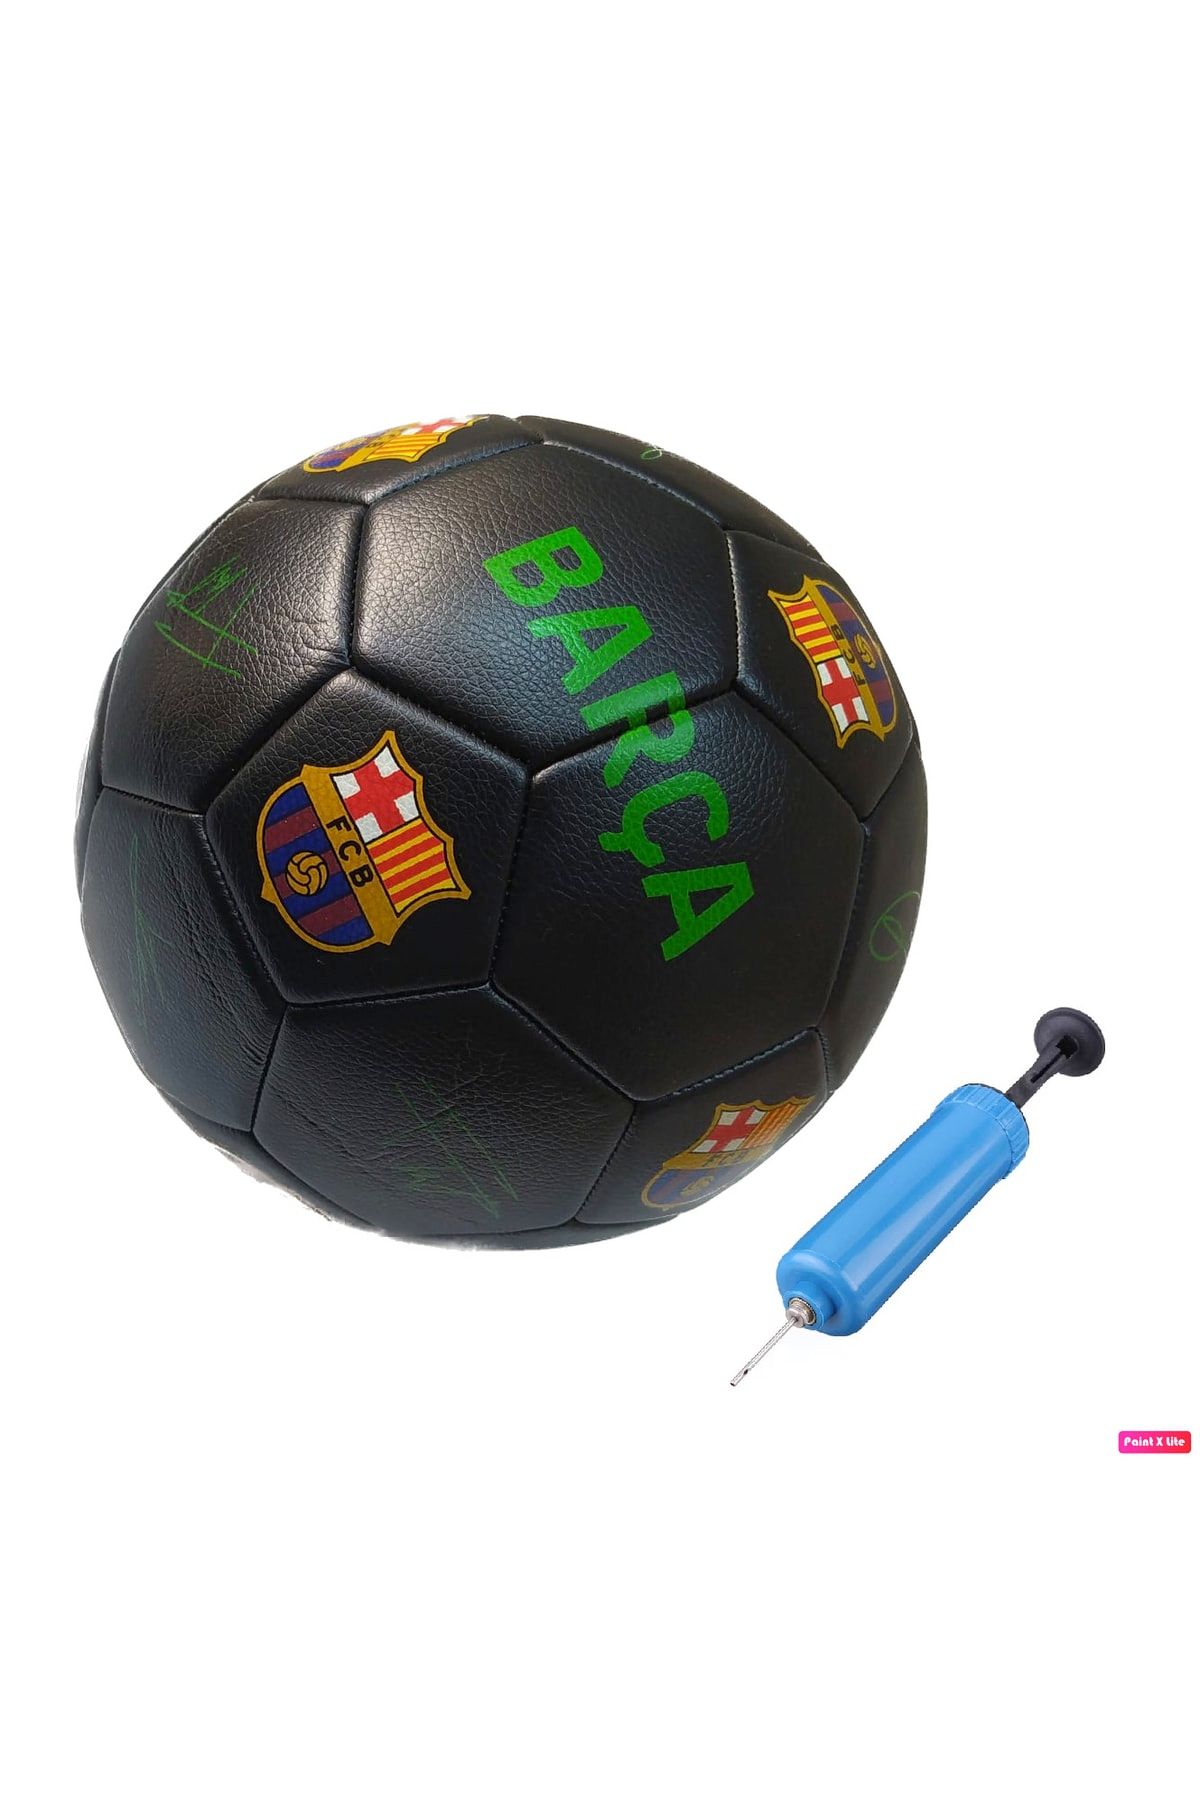 keufman Fc Barcelona Lisanslı Tam Kadro Imzalı 4 Astar El Dikişli 400 Gr Futbol Top No:5 Tüm Zemin + Pompa